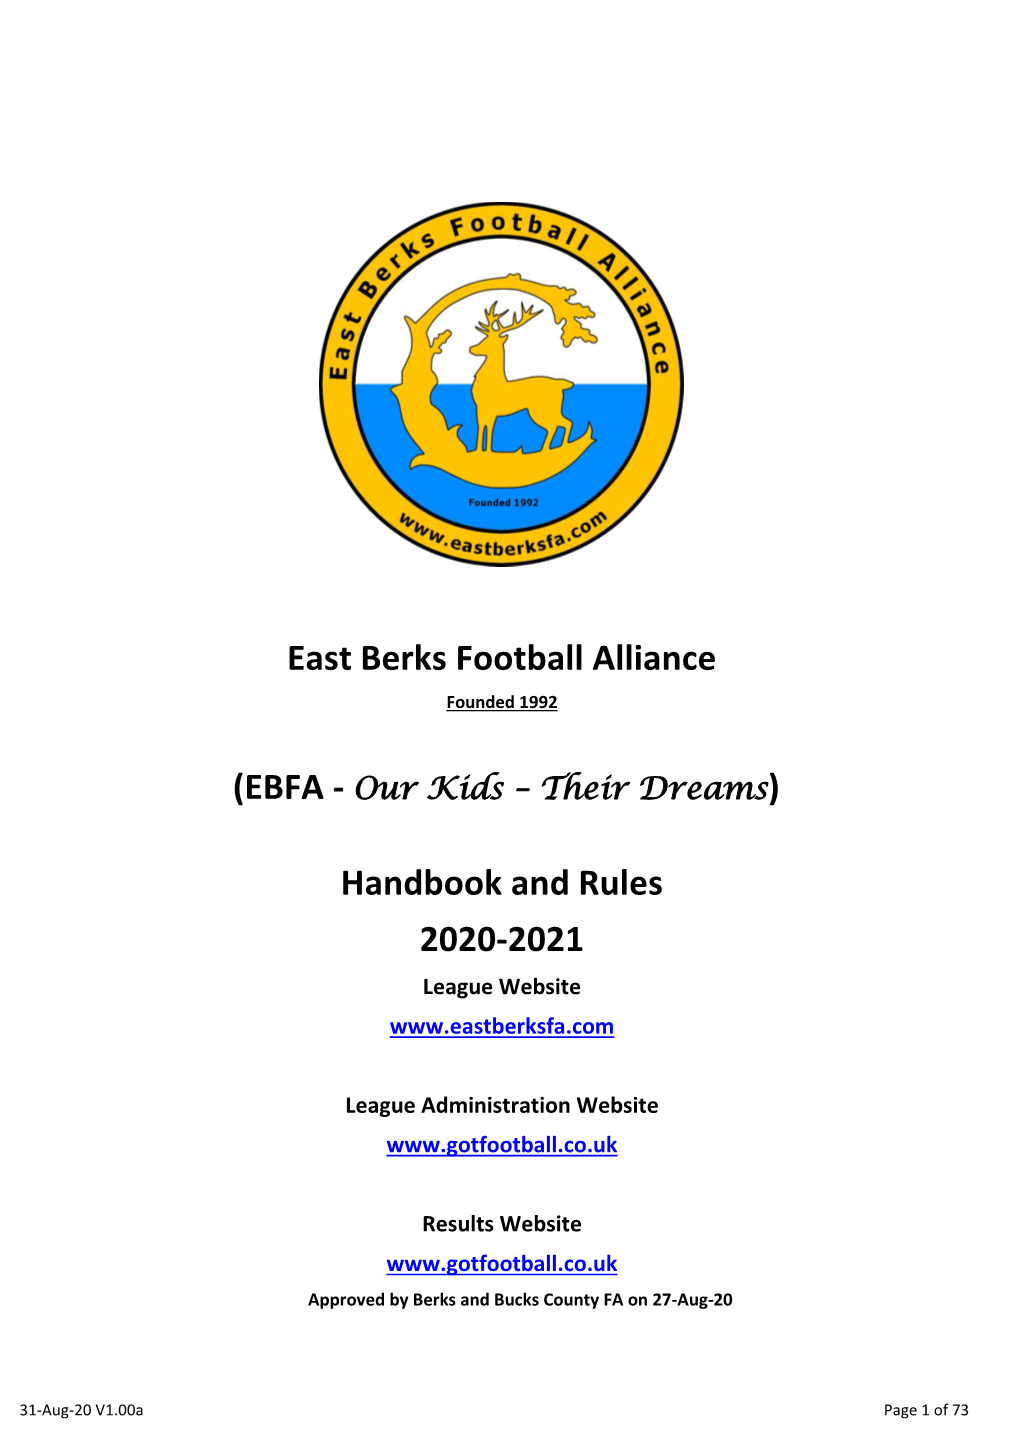 East Berks Football Alliance Handbook and Rules 2020-2021